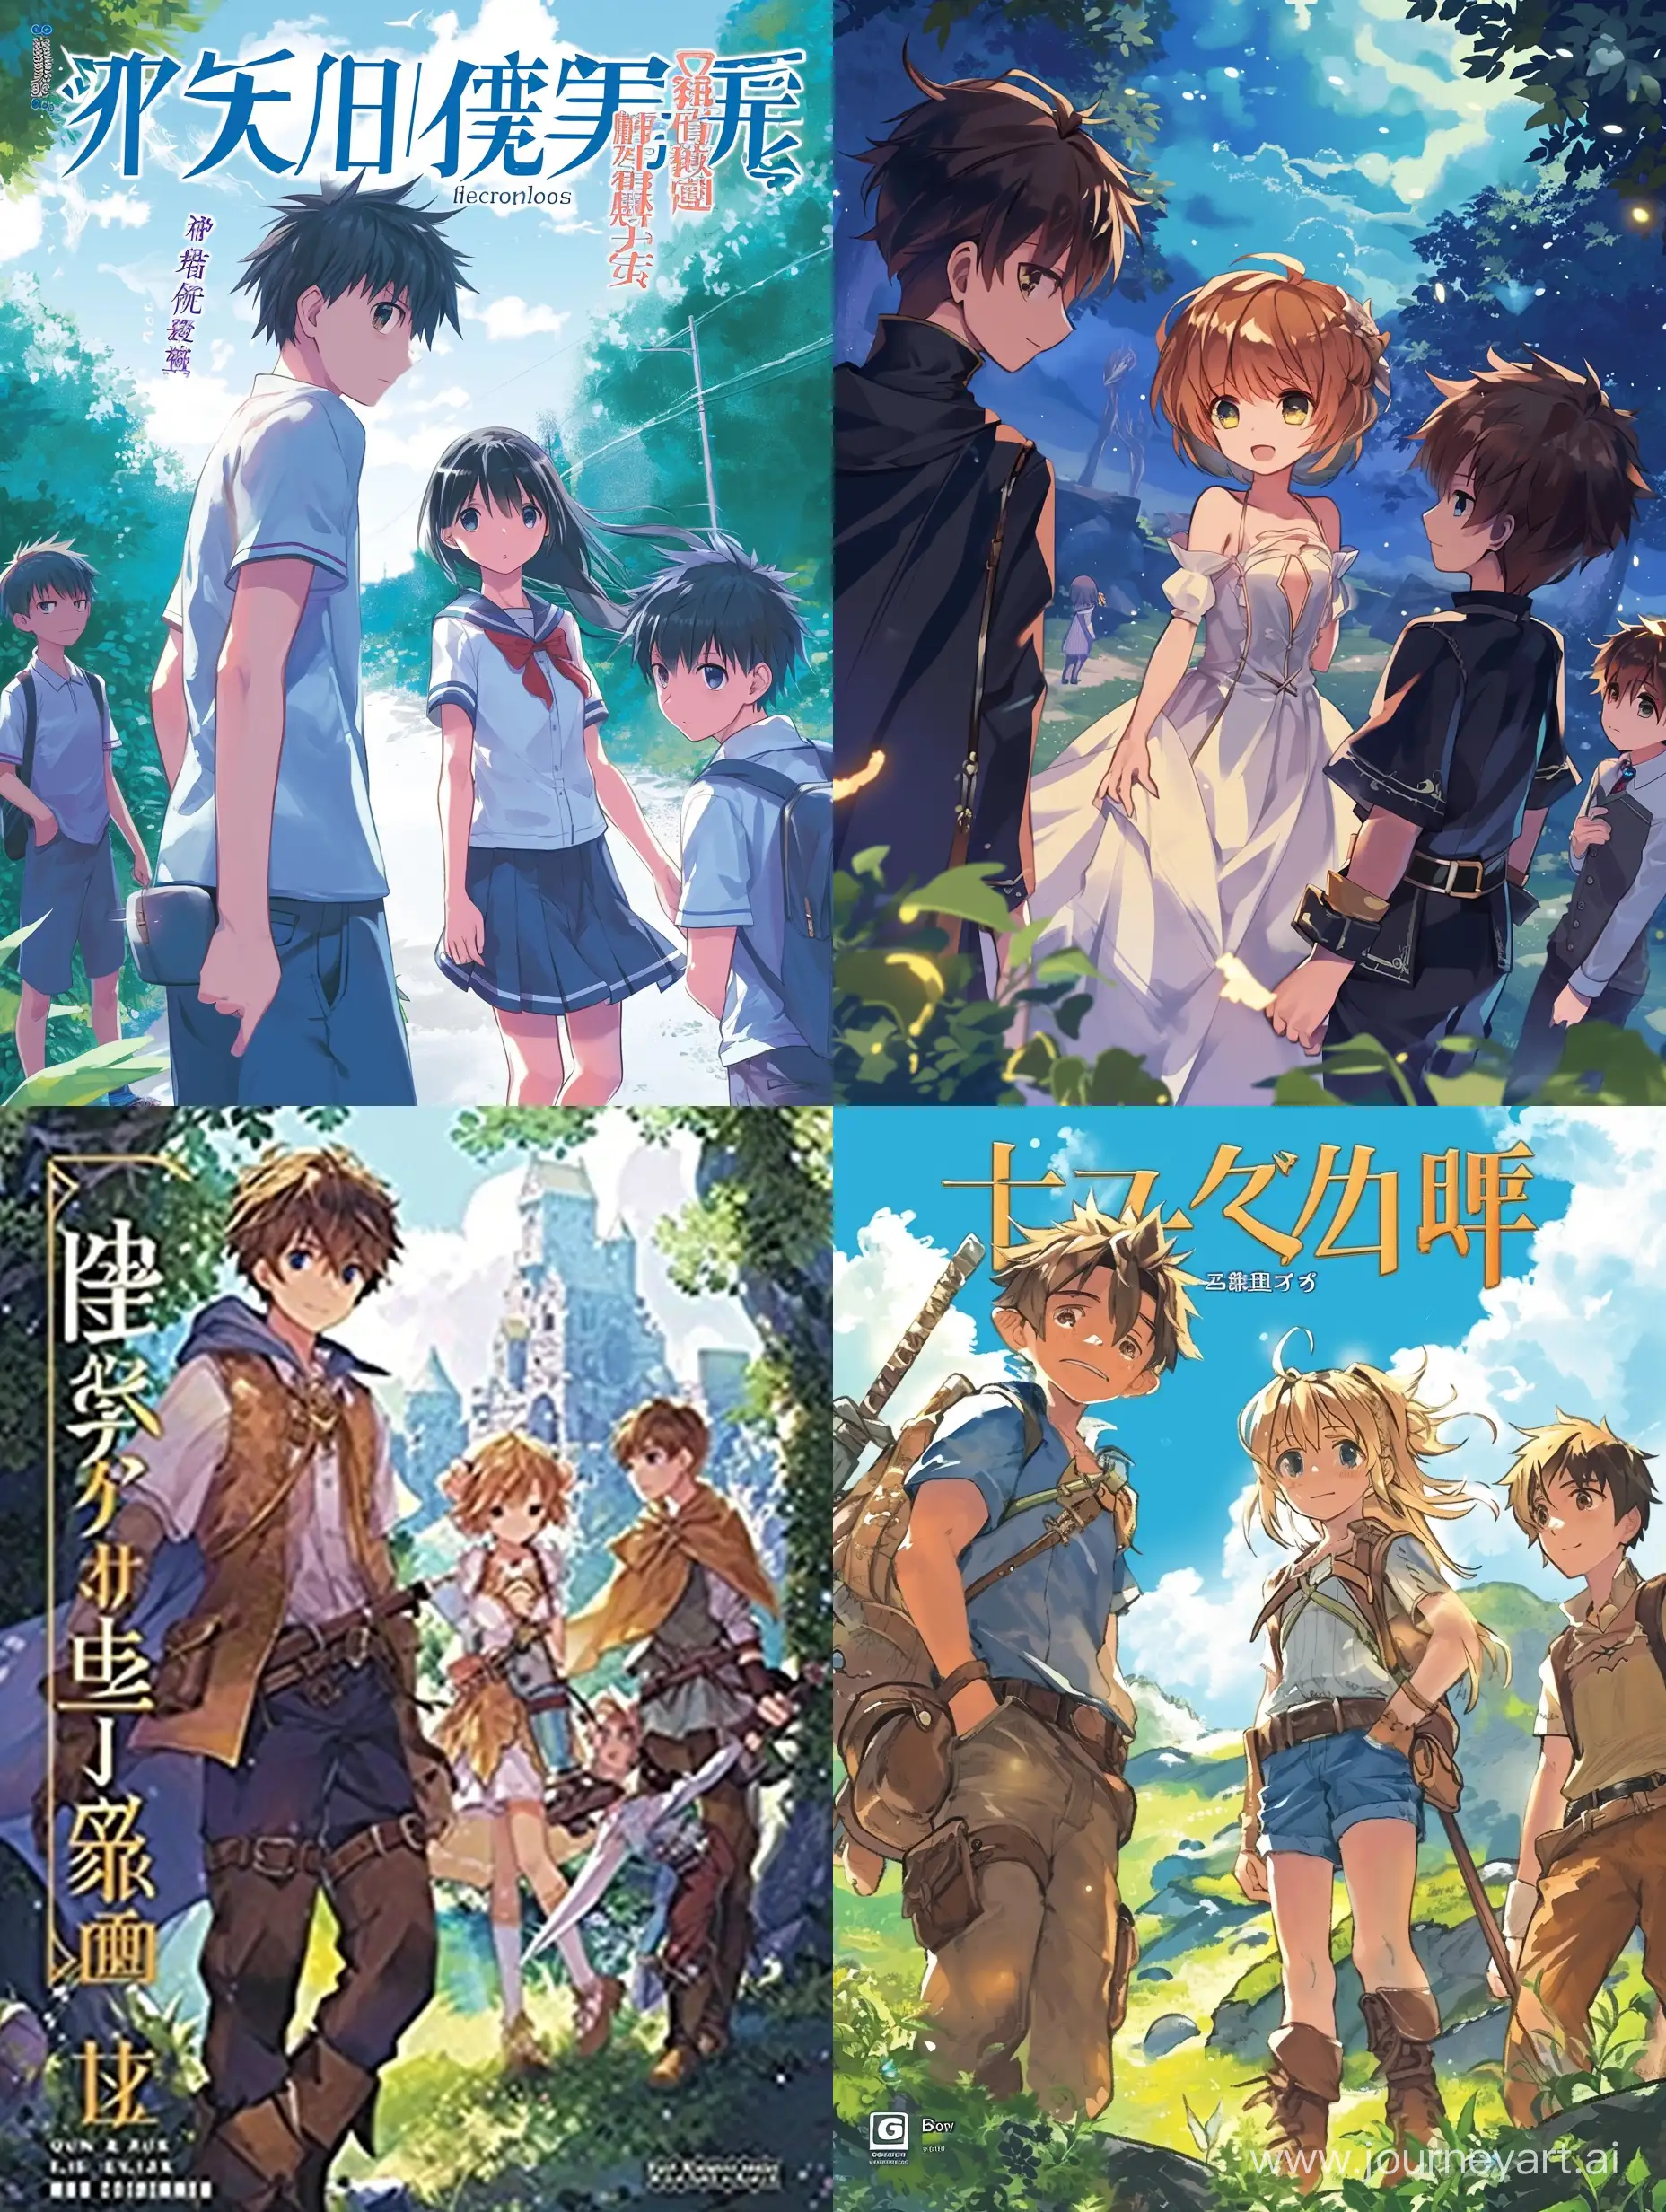 A cover for a light novel, fantasy world, boy and girl, two boys near, anime style.